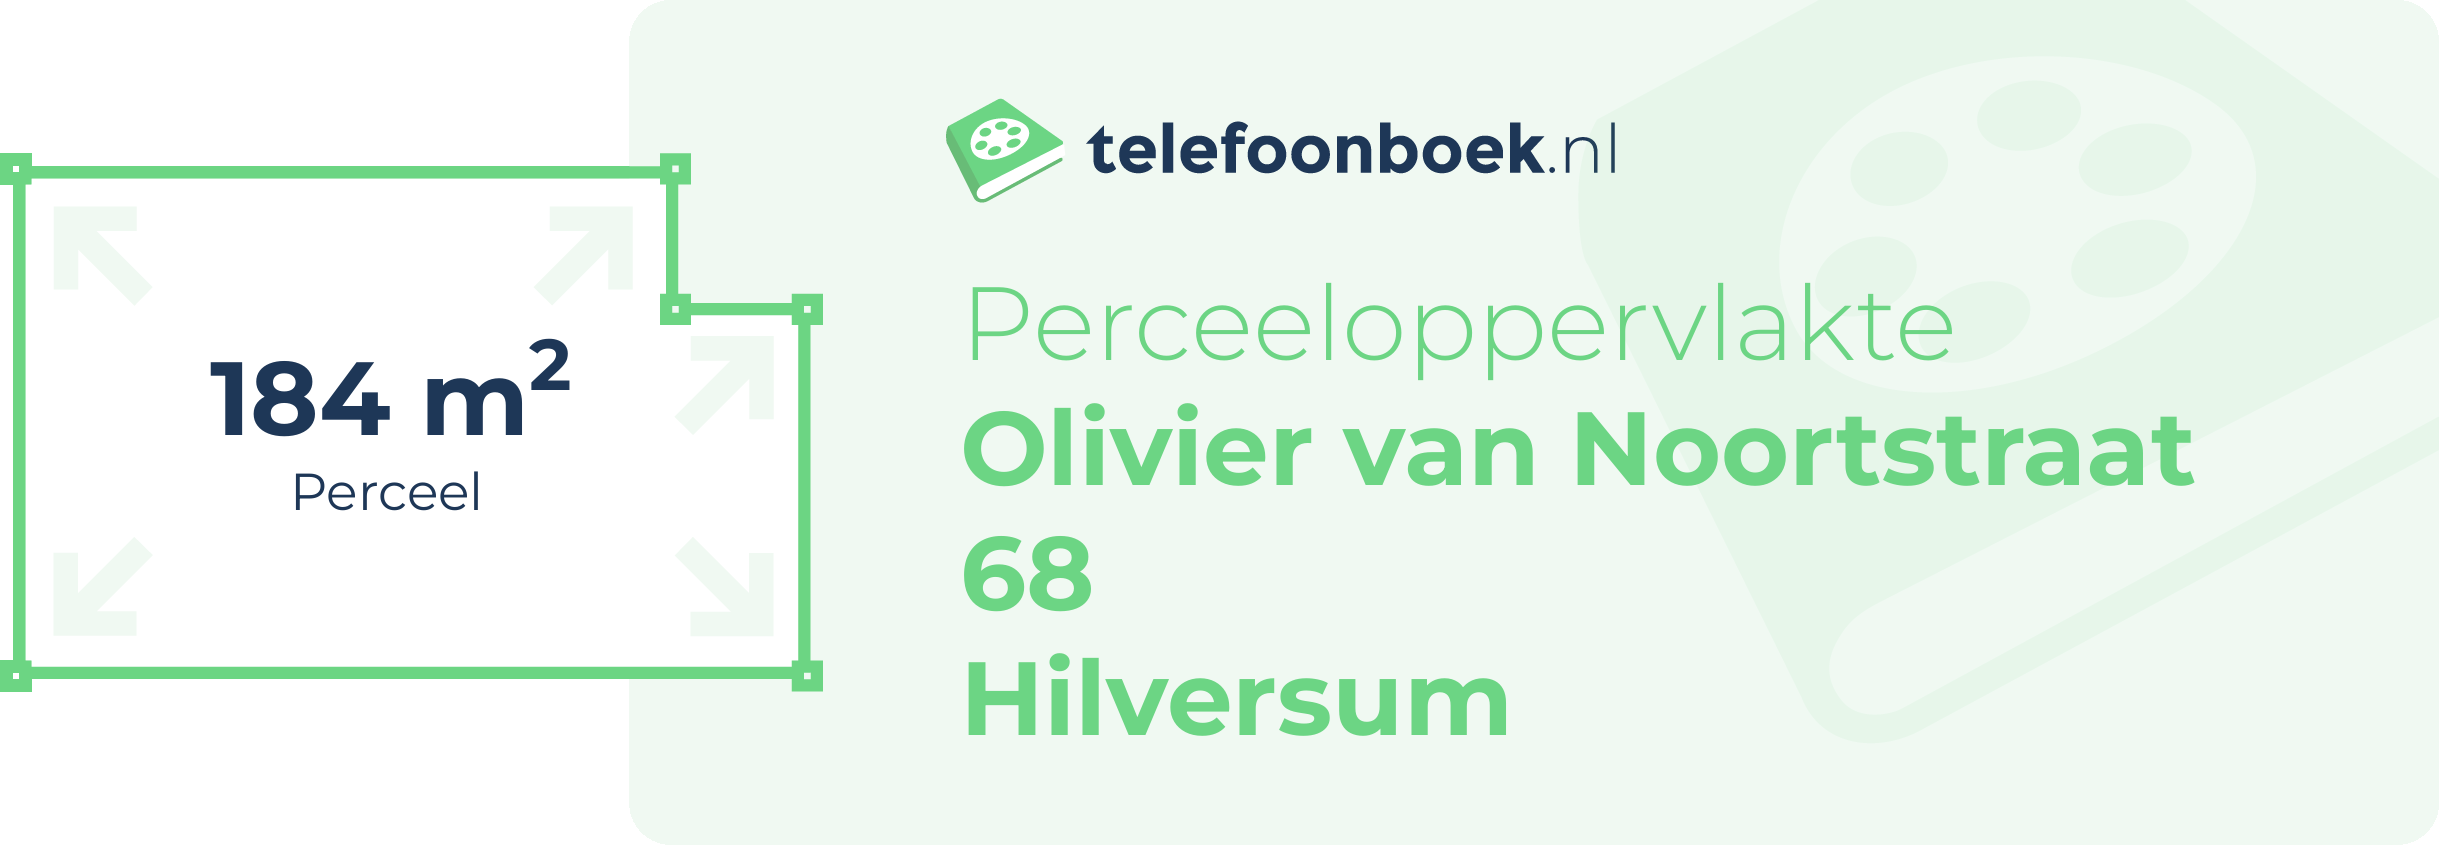 Perceeloppervlakte Olivier Van Noortstraat 68 Hilversum